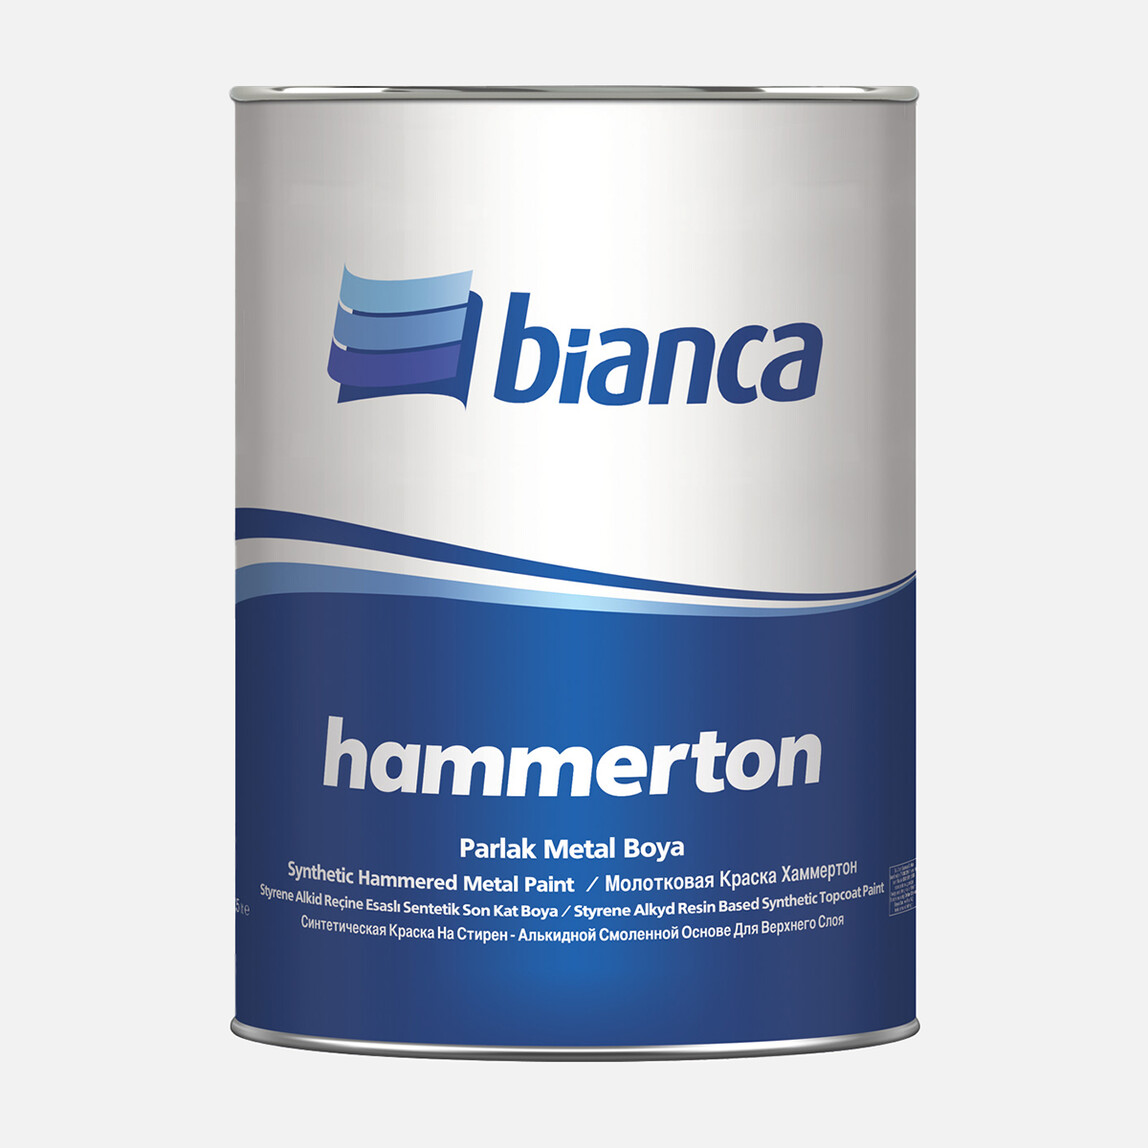    Bianca 0,75 L Hammerton Elegant Boya Koyu Gri  